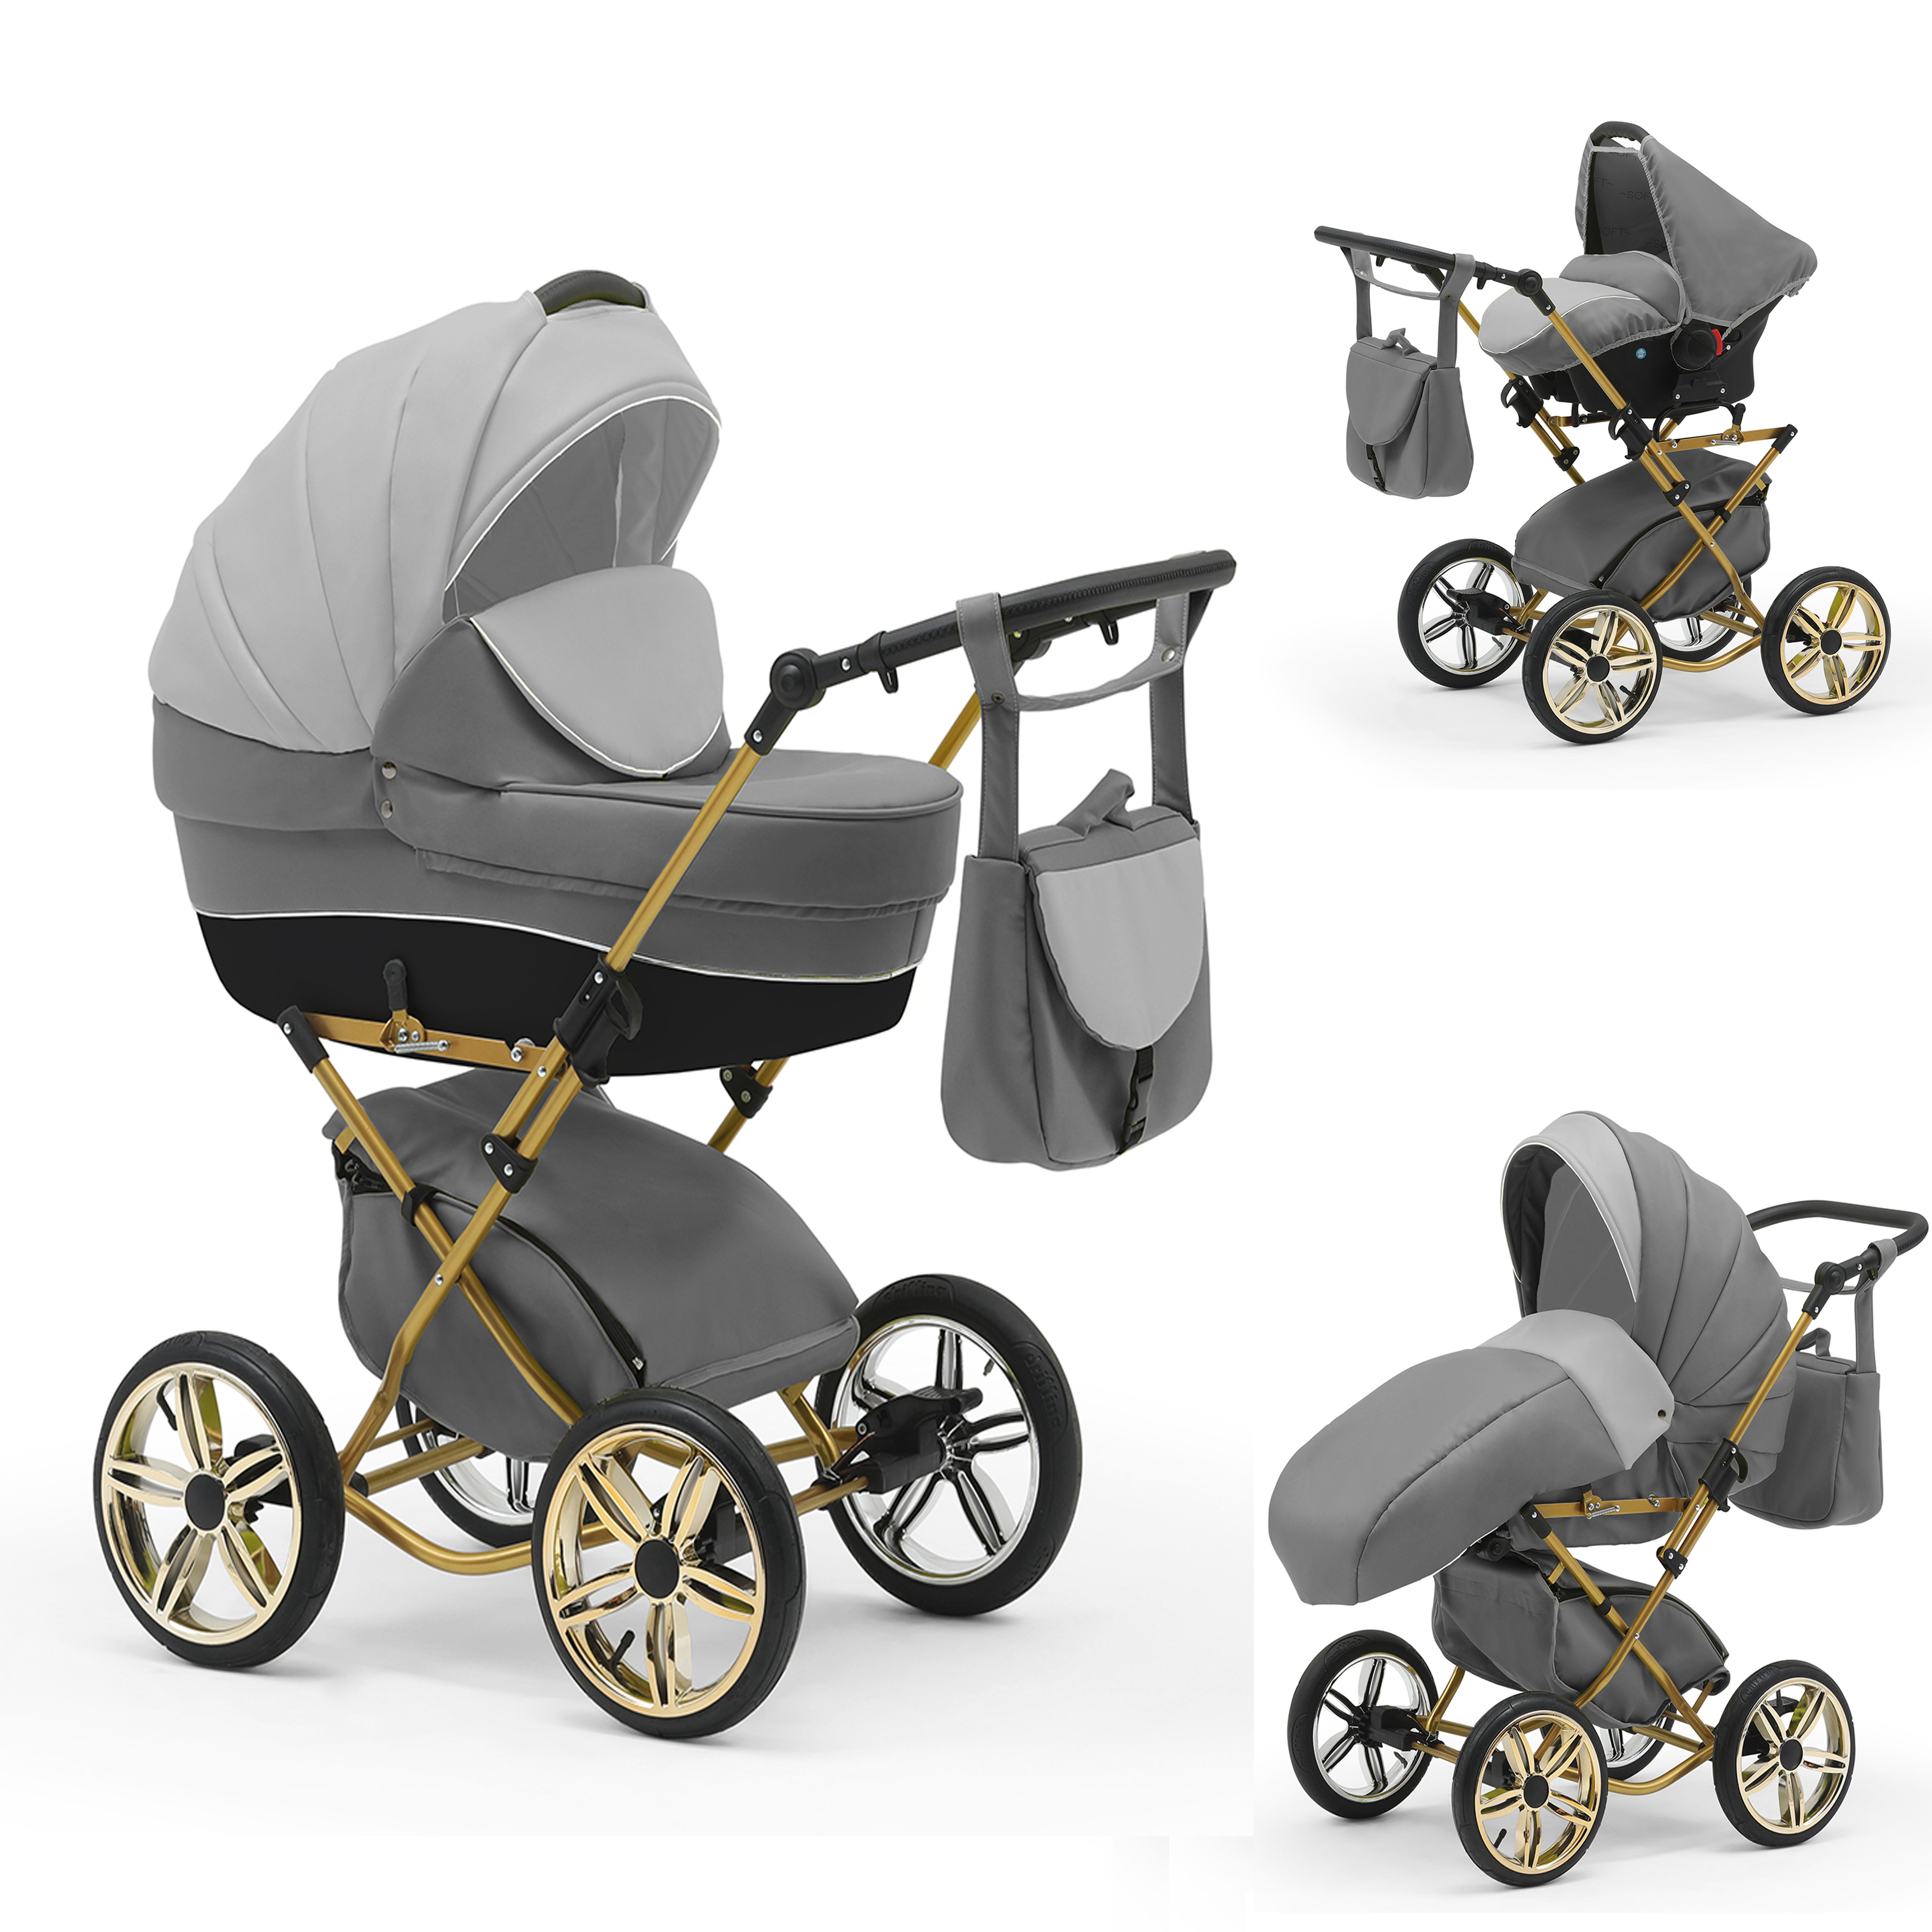 babies-on-wheels Kombi-Kinderwagen Sorento 3 in 1 inkl. Autositz - 13 Teile - in 10 Designs Grau-Dunkelgrau-Schwarz